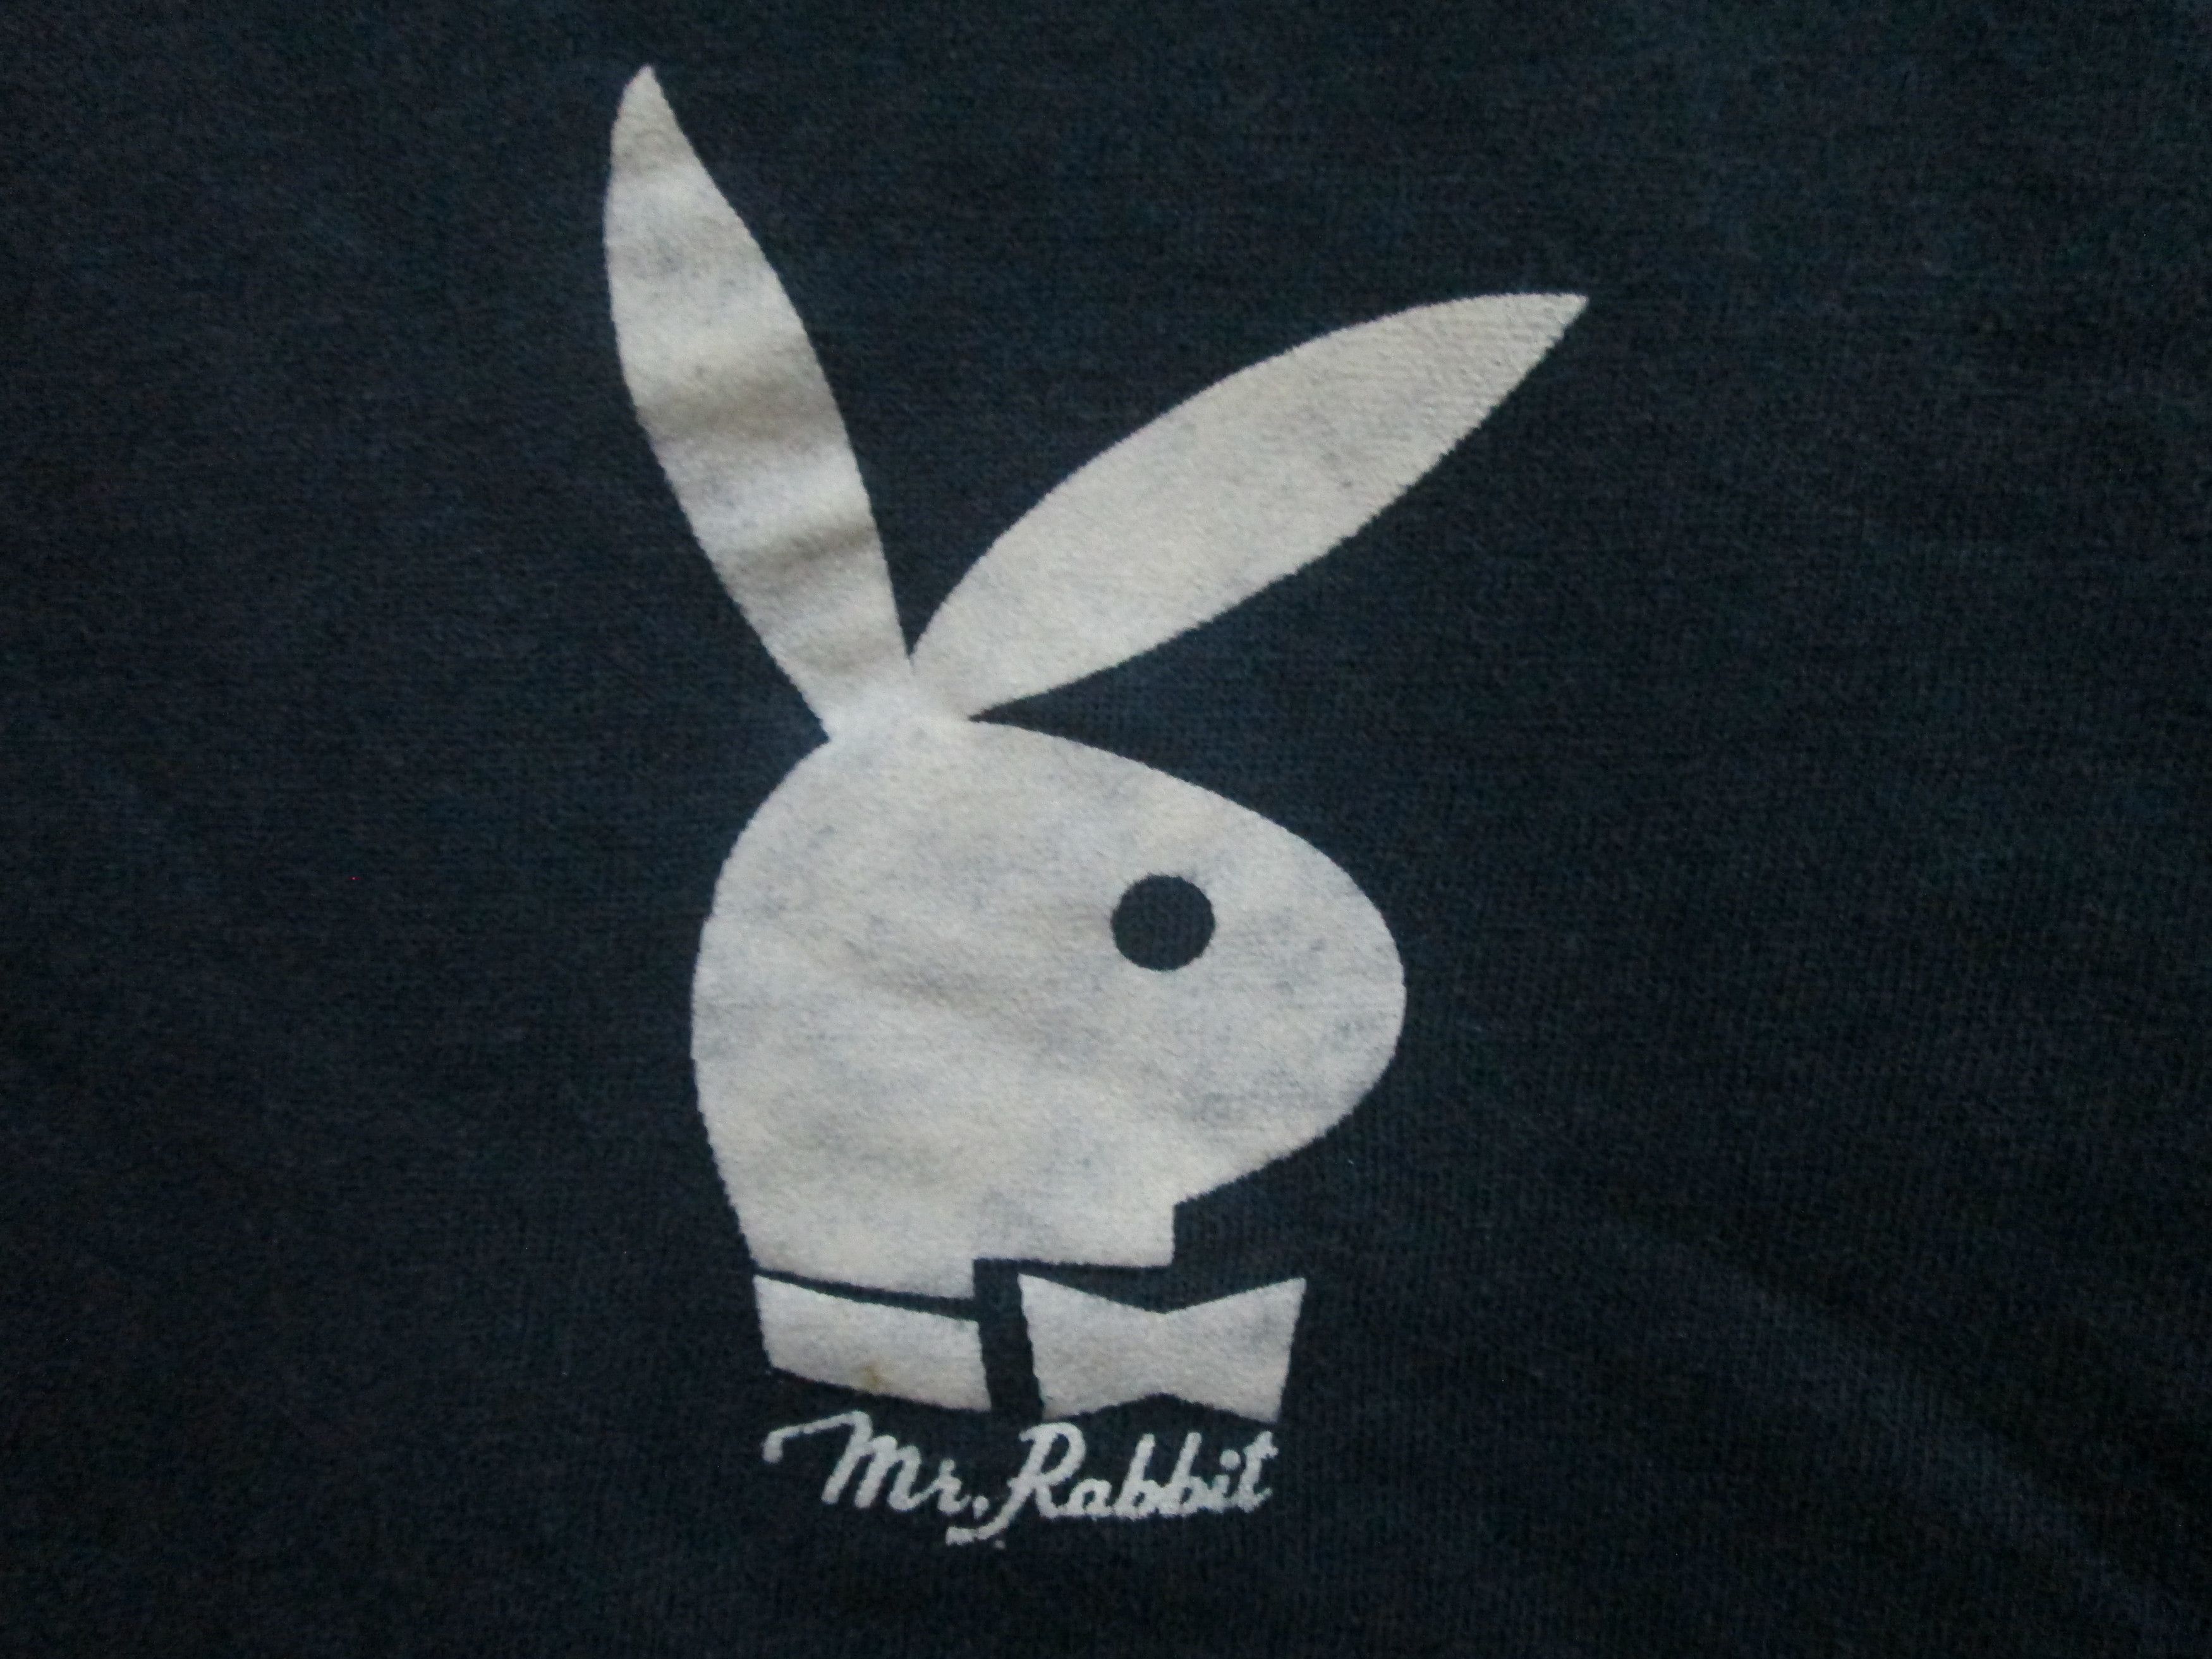 Vintage Playboy Mr. Rabbit Big Logo Rare Spellout Sweatshirt Size US M / EU 48-50 / 2 - 4 Thumbnail